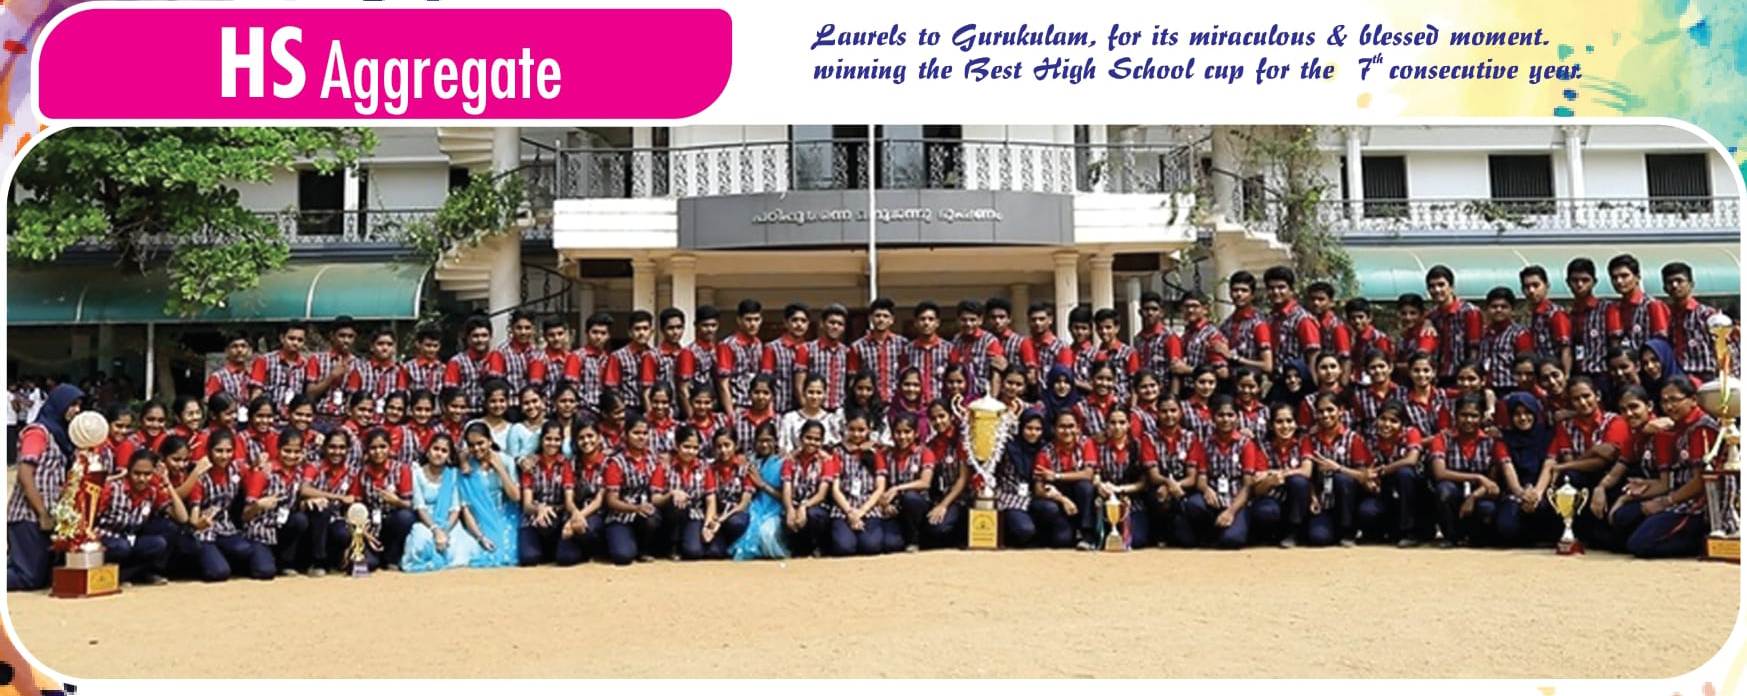 Best School Award - Kerala State Kalolsavam 2018-2019